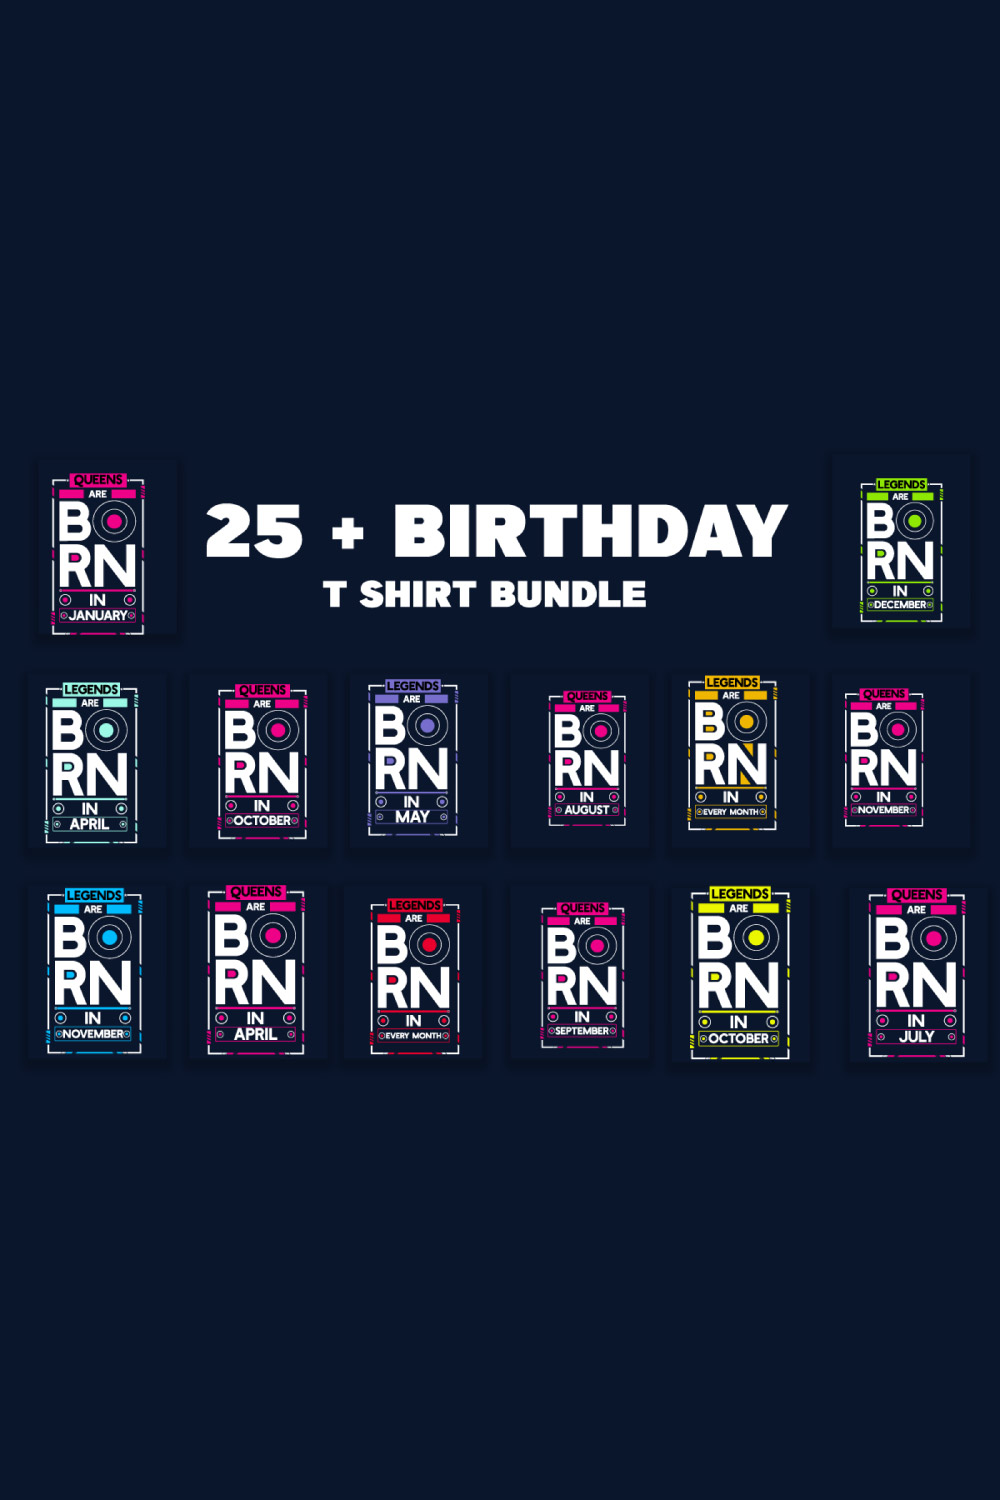 Trendy Birthday T-Shirt Bundle, legends are born and queens are born birthday t shirt pinterest preview image.